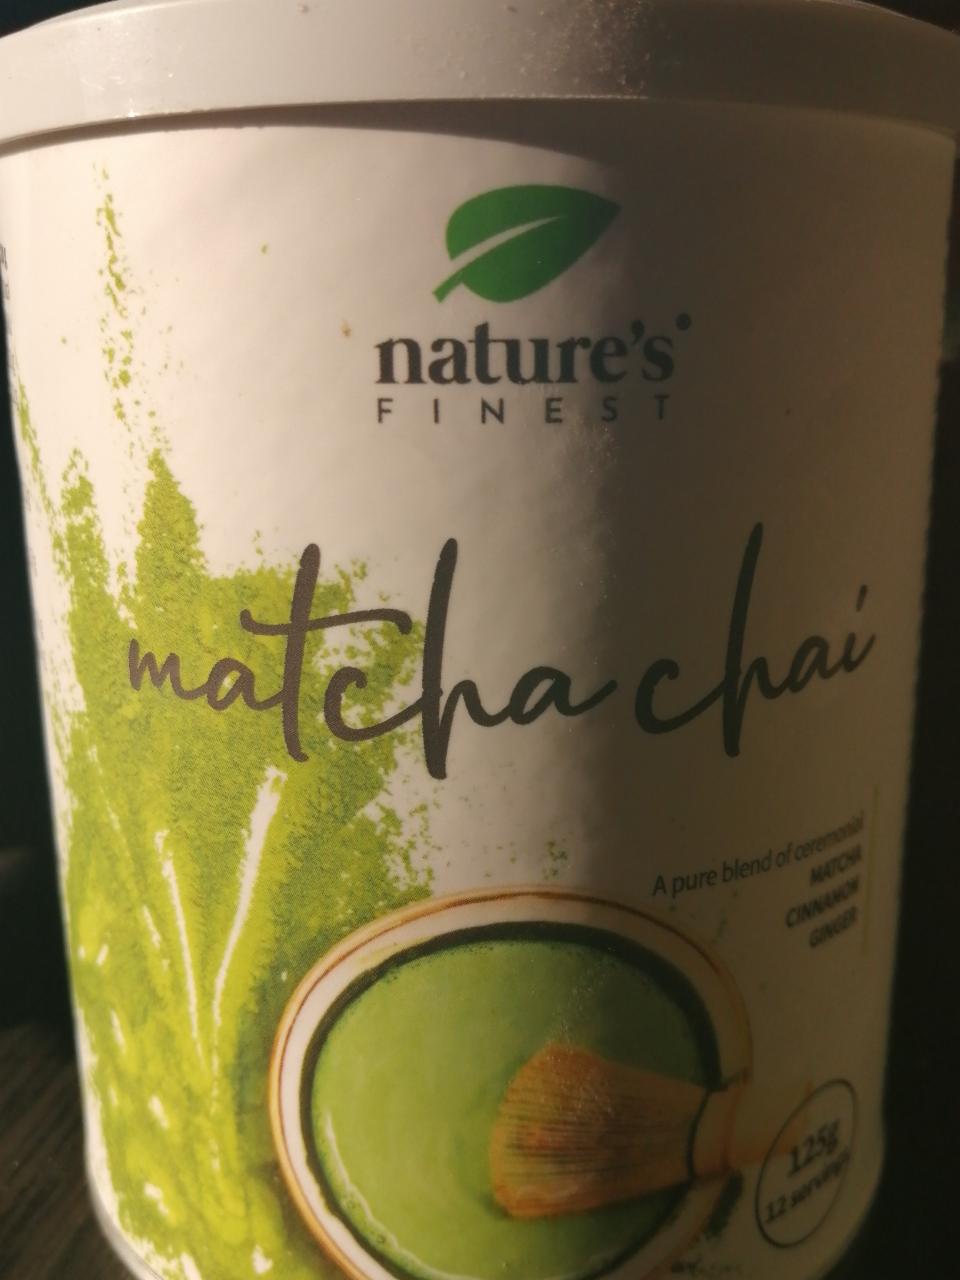 Képek - Matcha chai Nature's finest